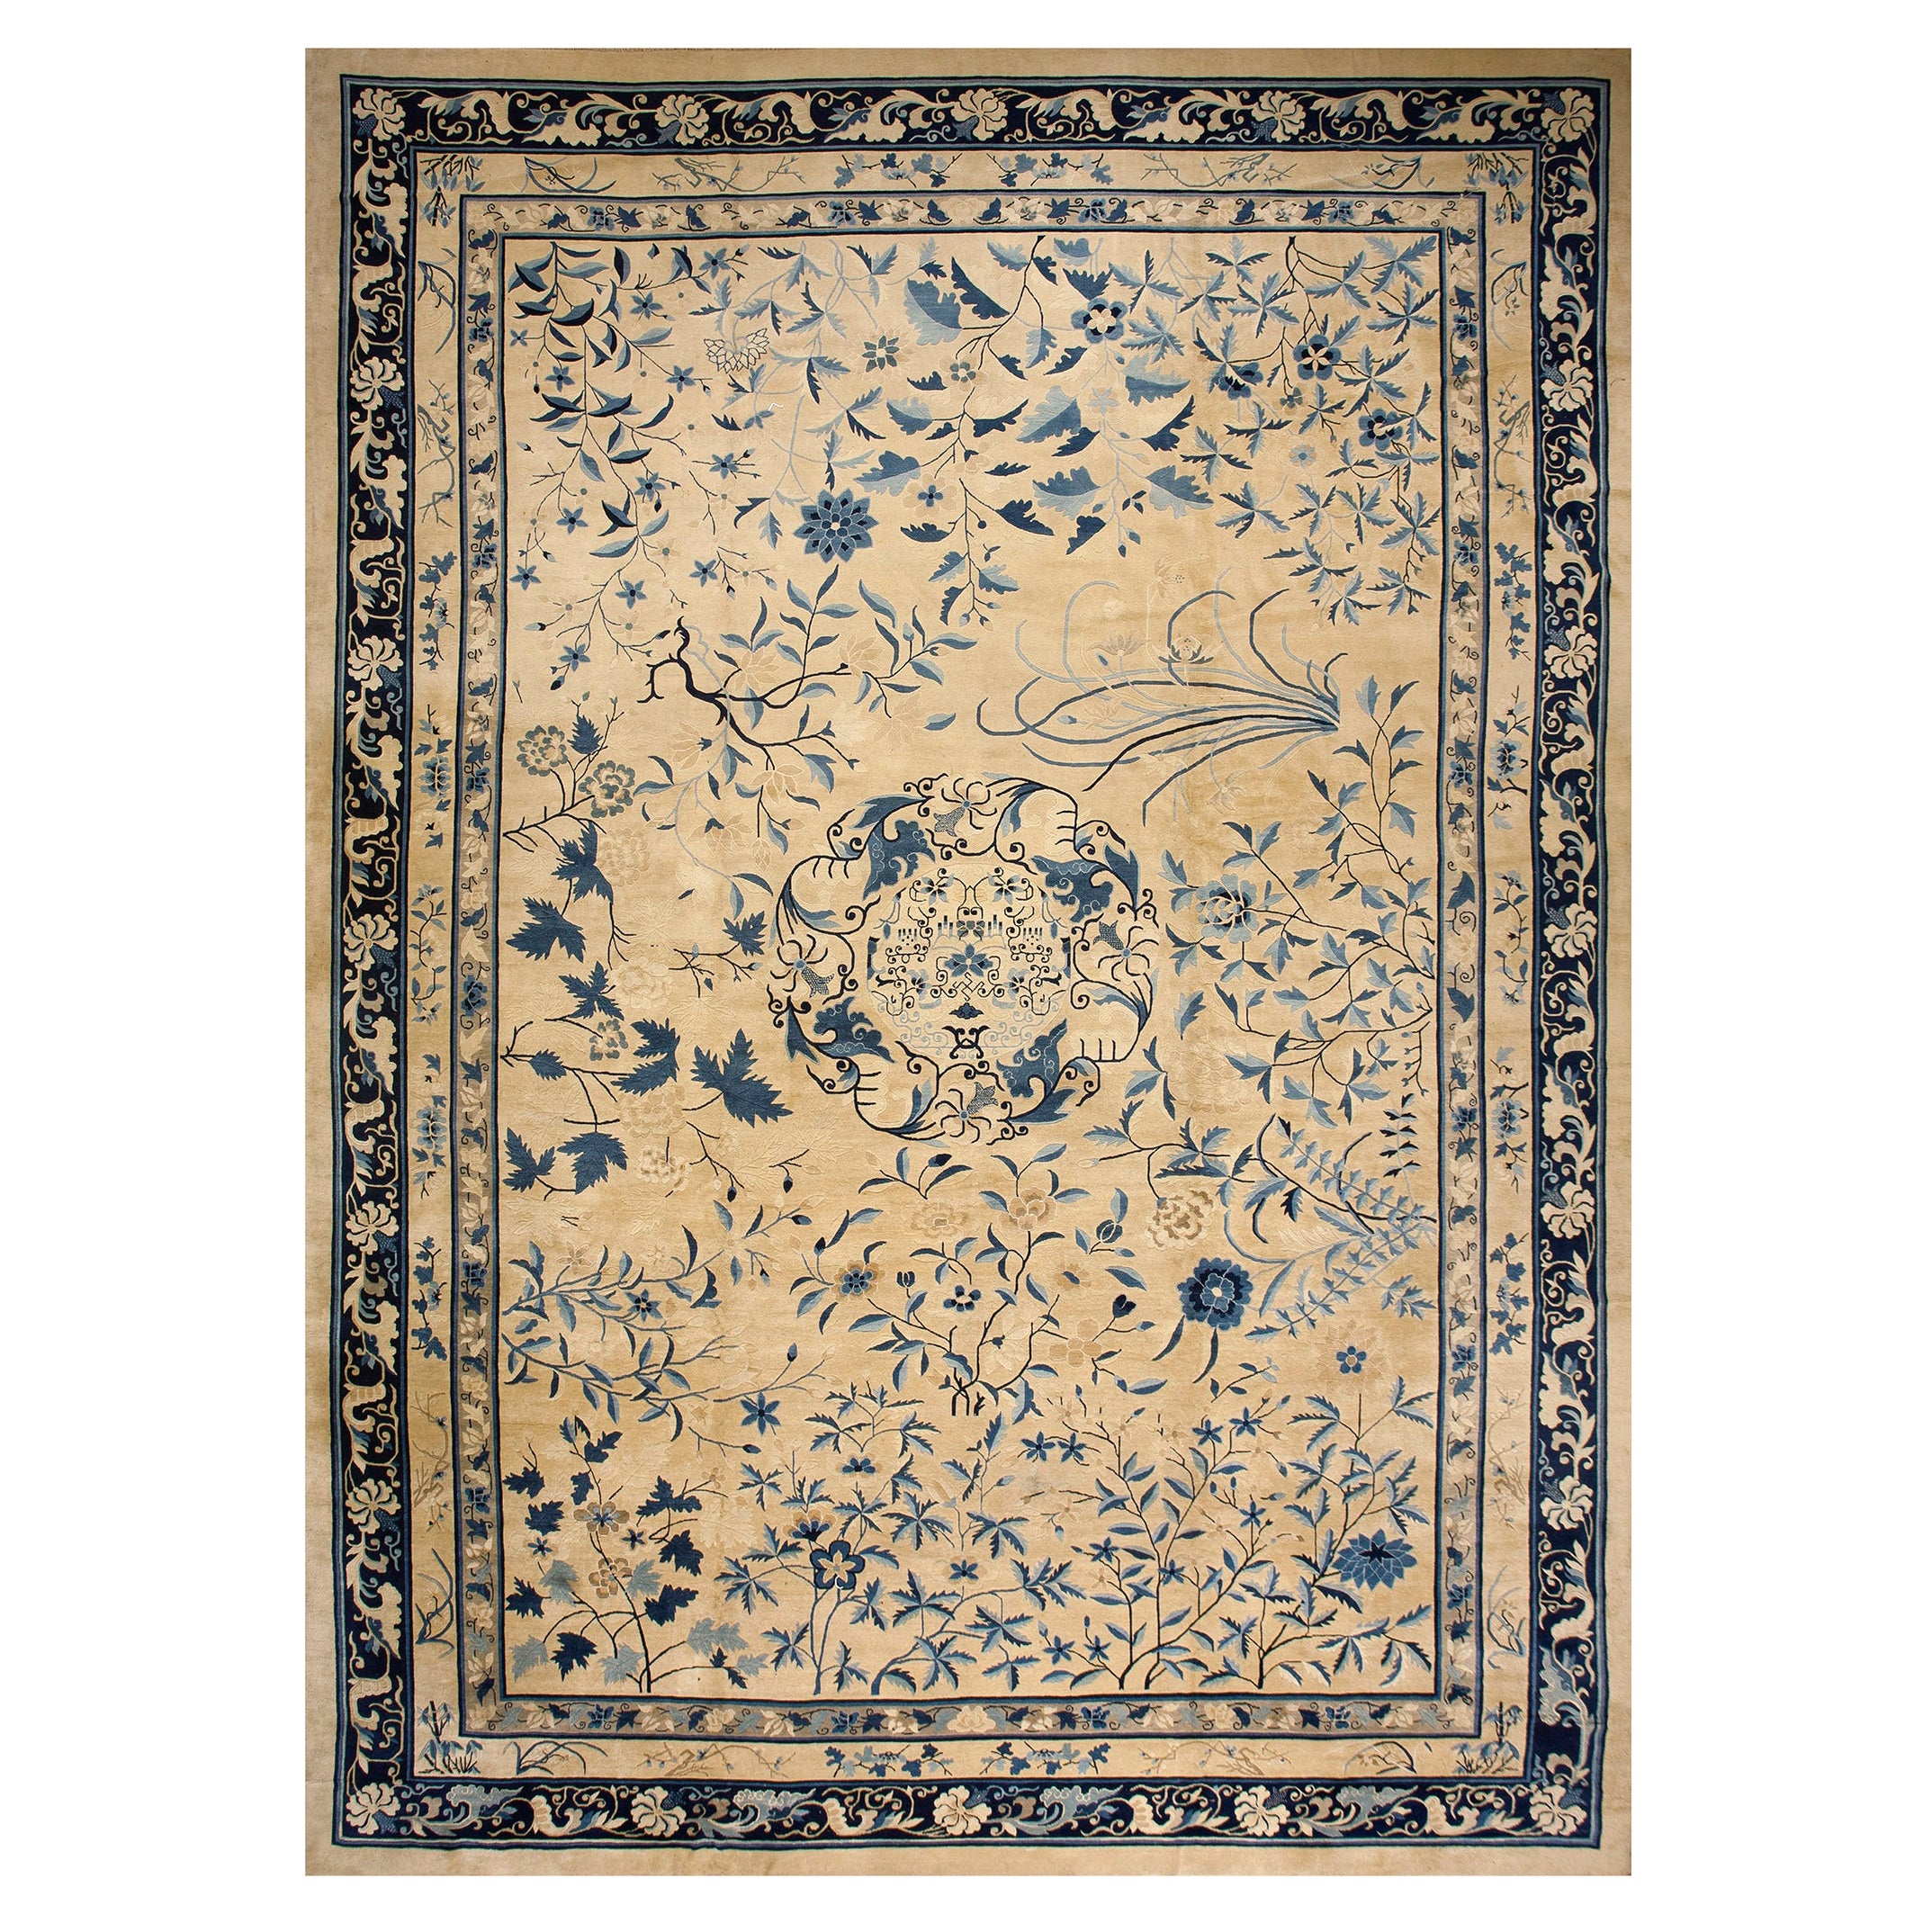 Late 19th Century Chinese Peking Carpet ( 13' 9" x 19' 5" - 420 x 592 cm )